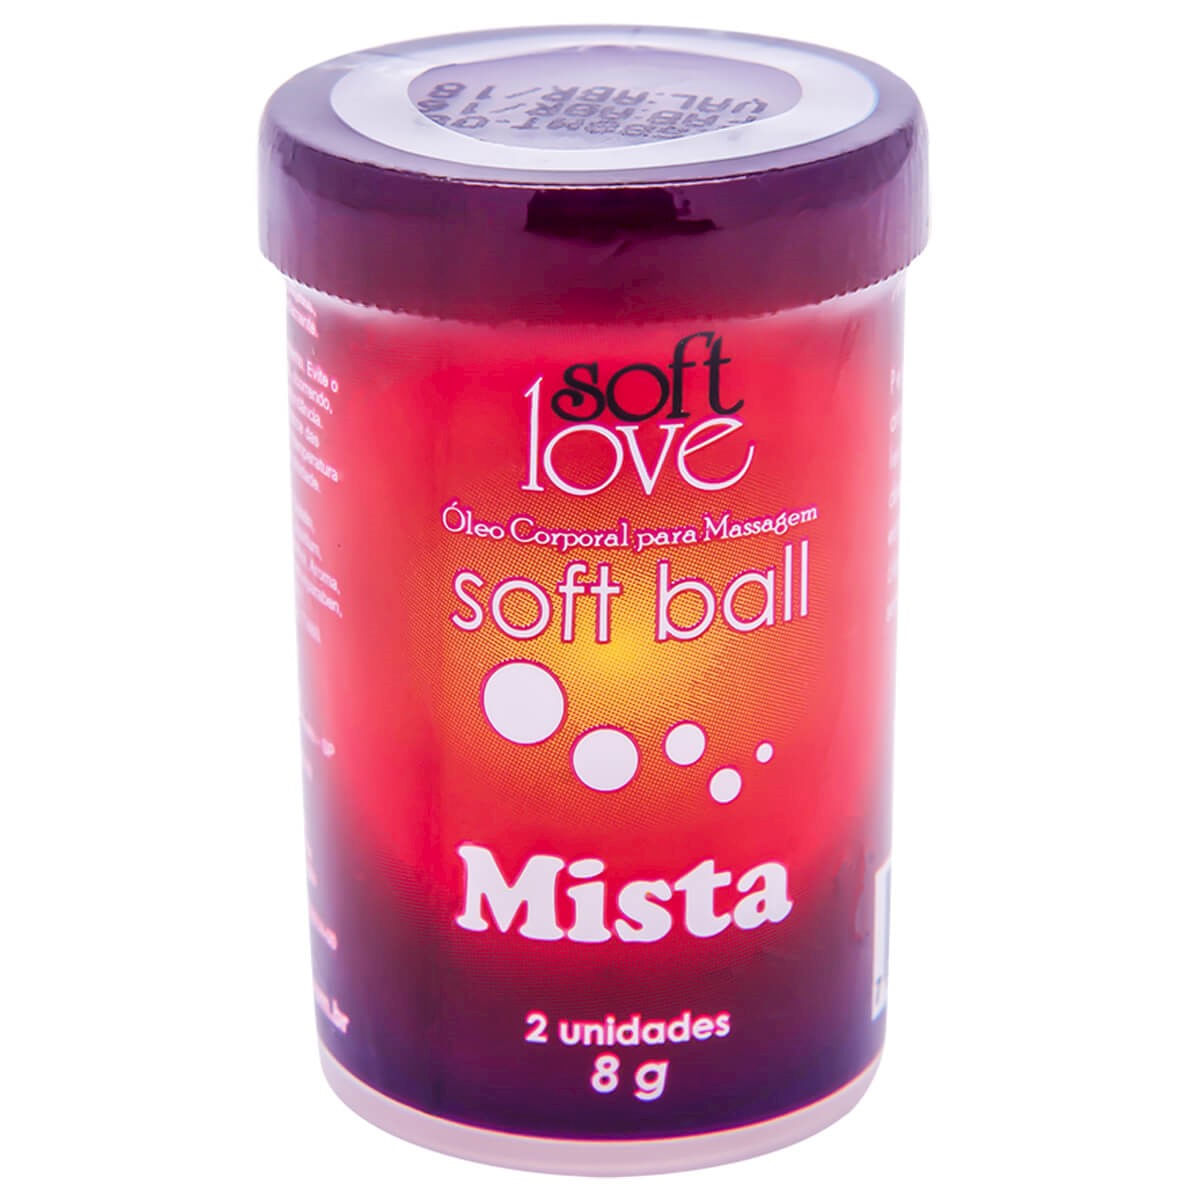 Soft Ball Bolinha Funcional Mista 2un Soft Love